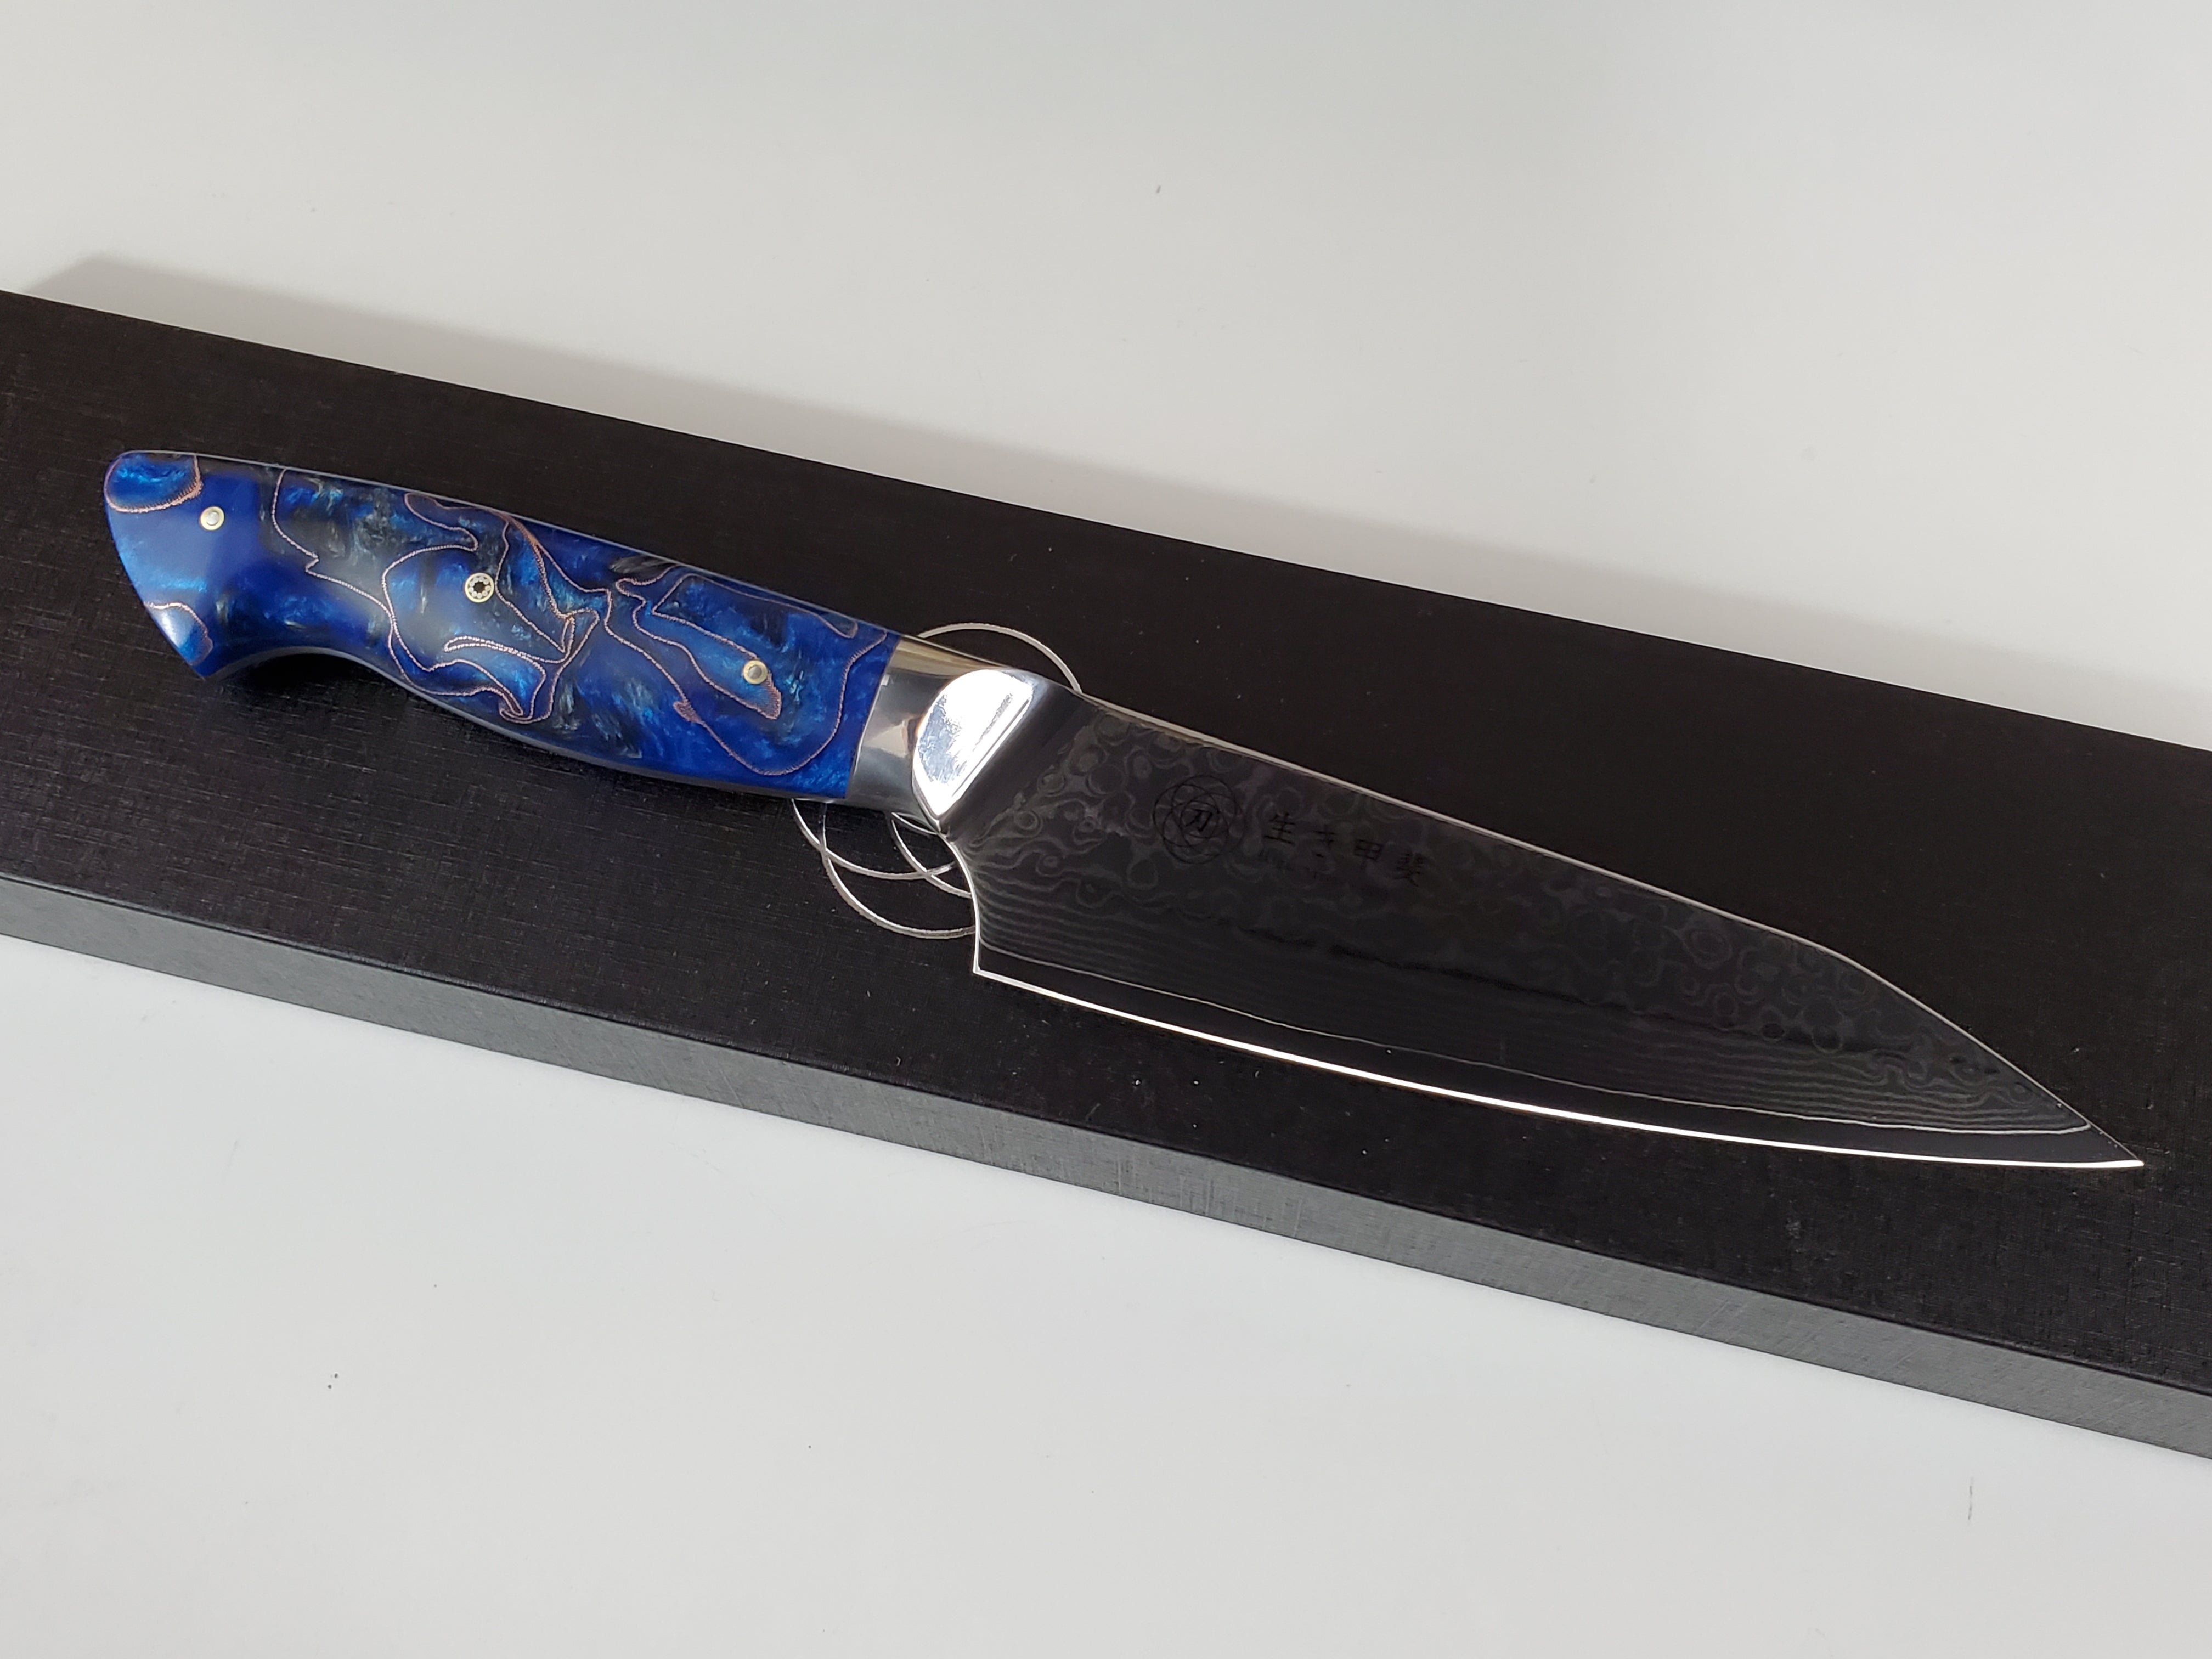 VG10 Damascus Chef knife - 6"